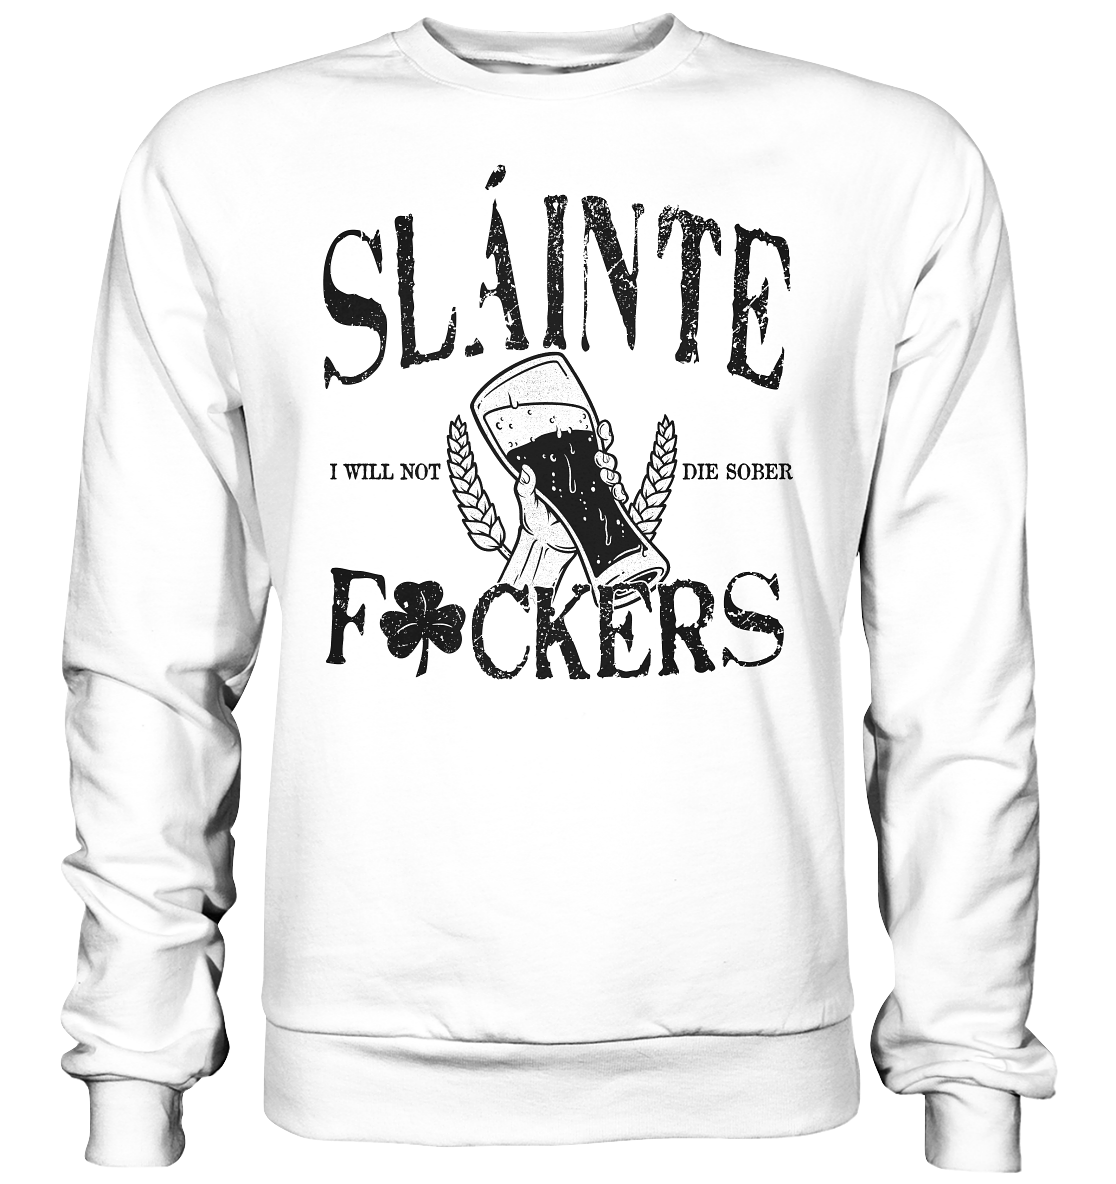 Sláinte "F*ckers" - Basic Sweatshirt